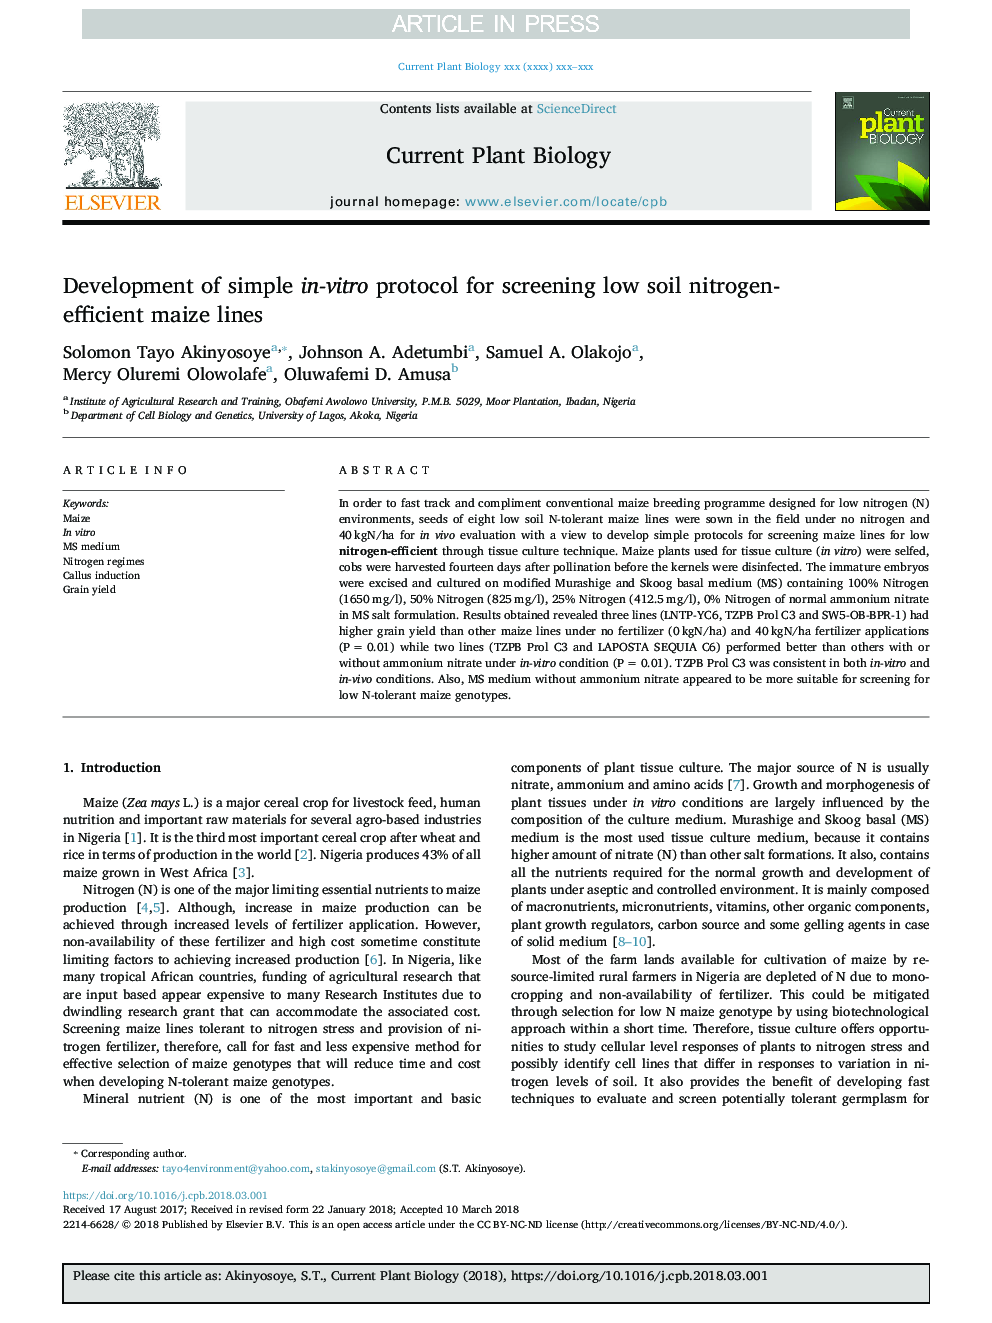 Development of simple in-vitro protocol for screening low soil nitrogen-efficient maize lines